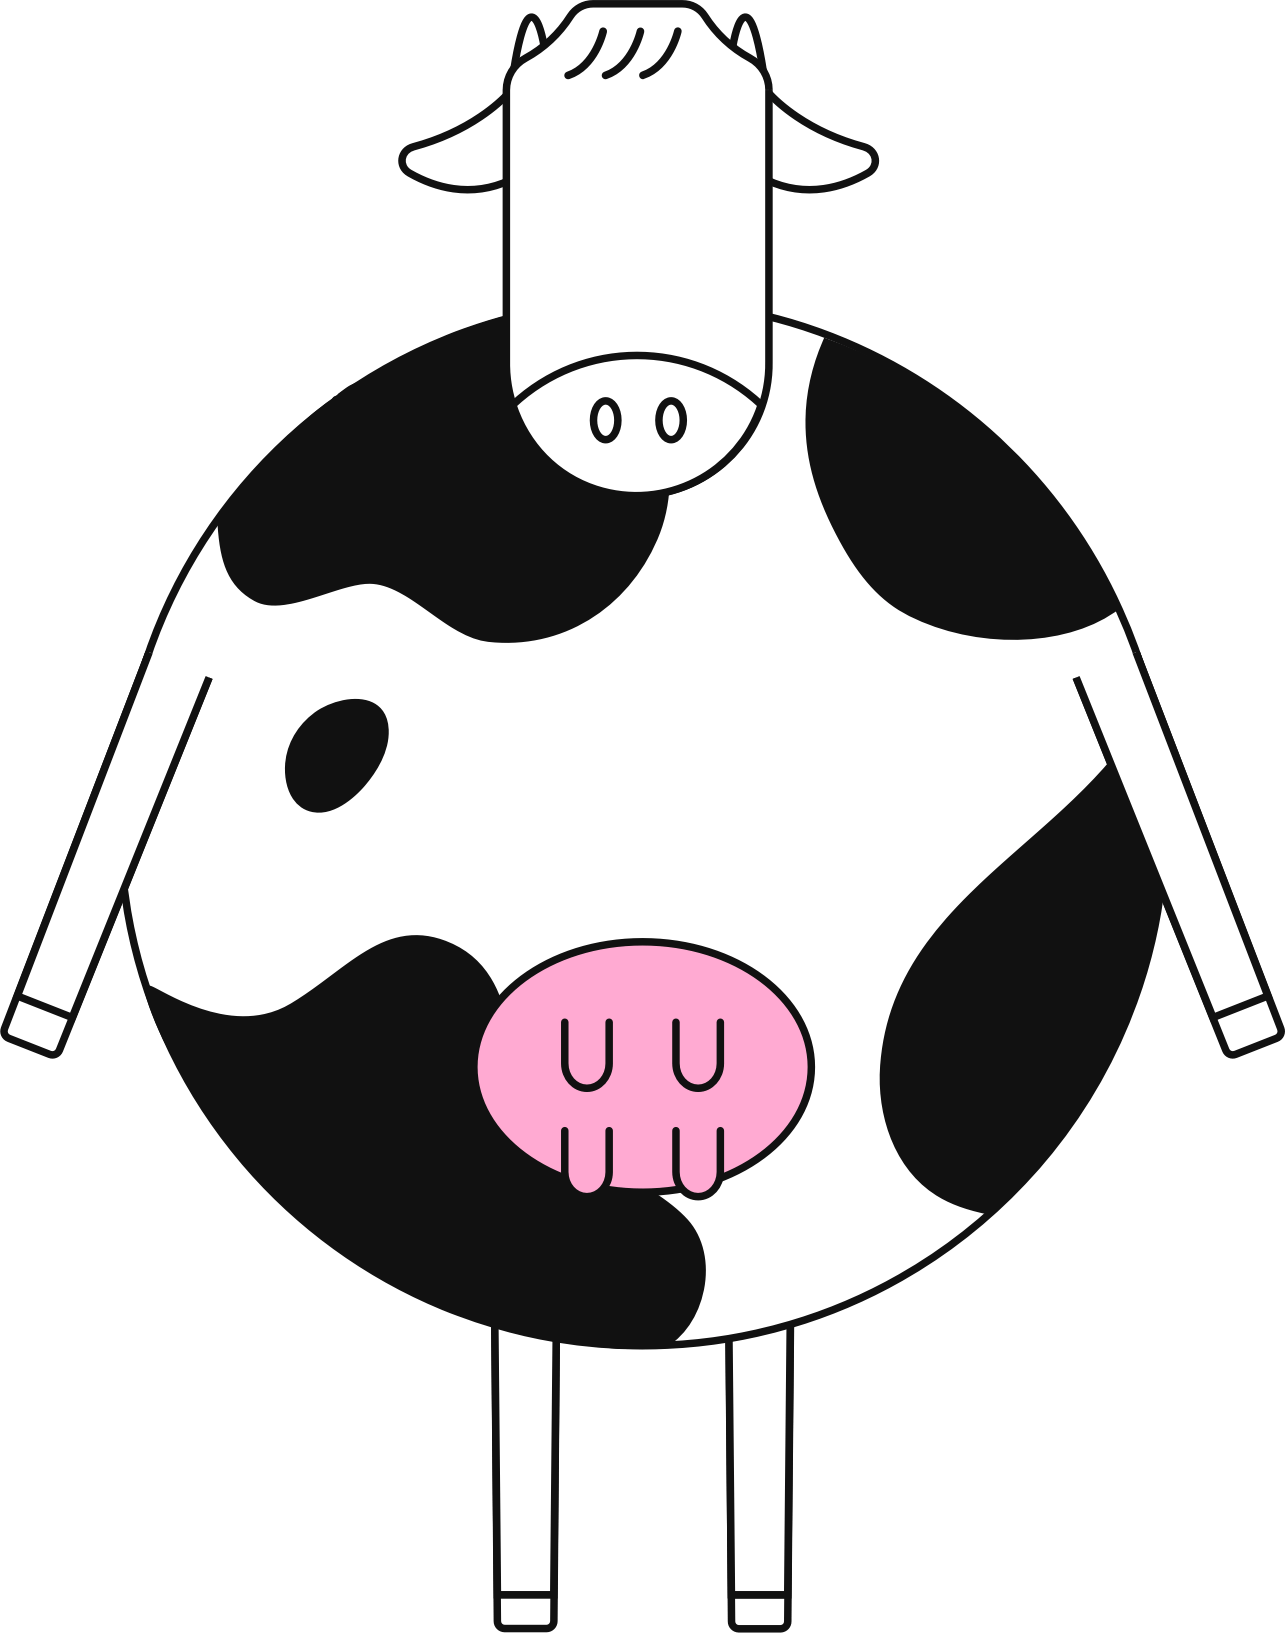 bored cow full